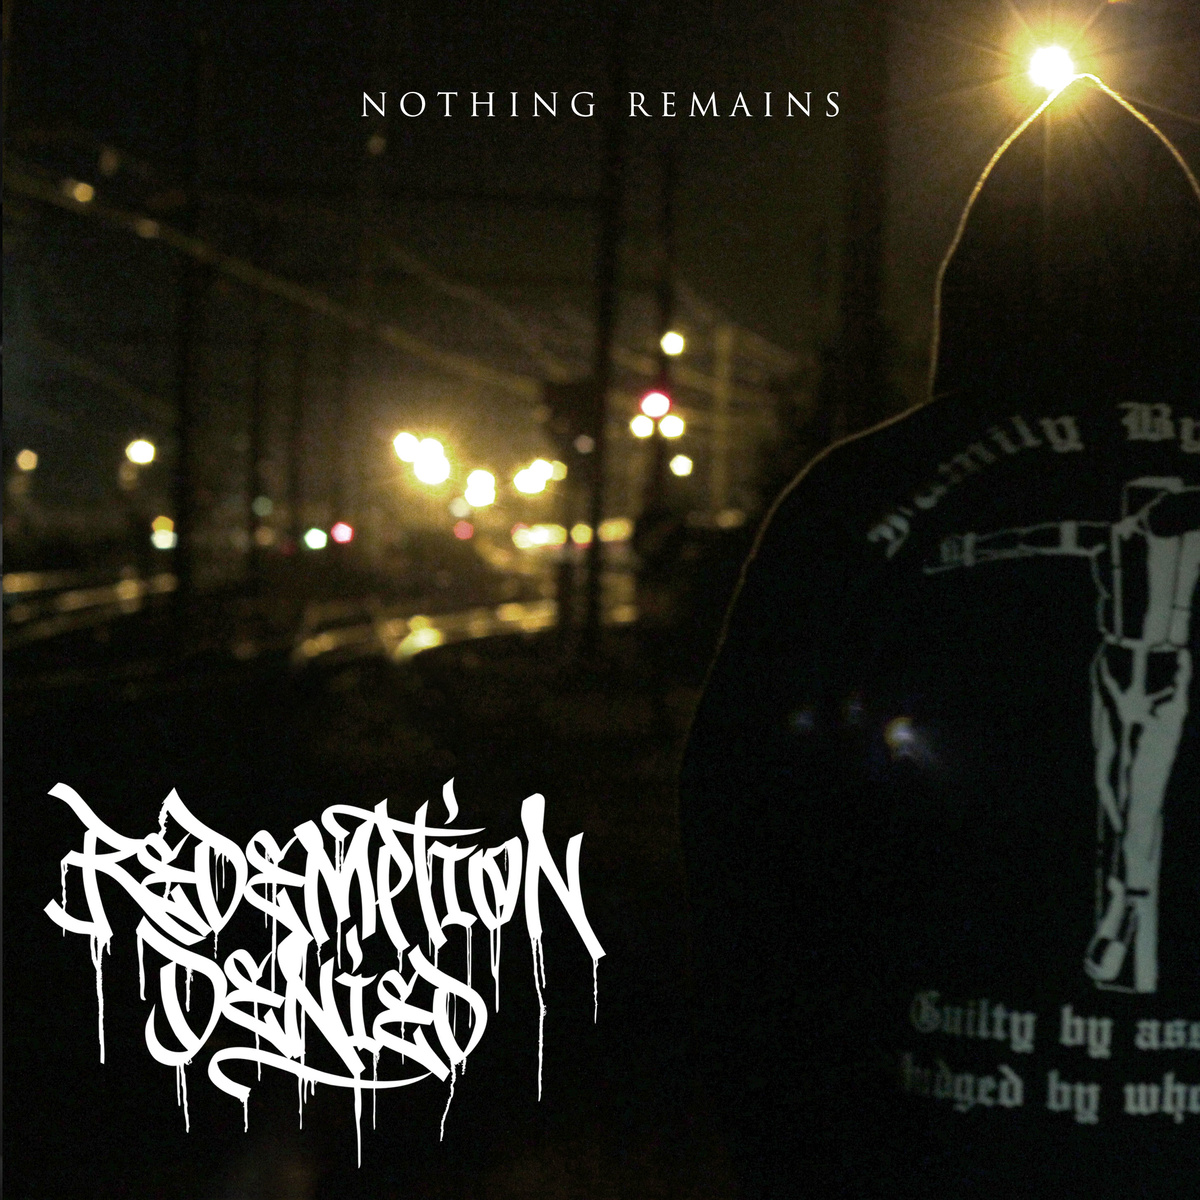 Redemption Denied post “Nothing Remains” ft Klaas RTTM